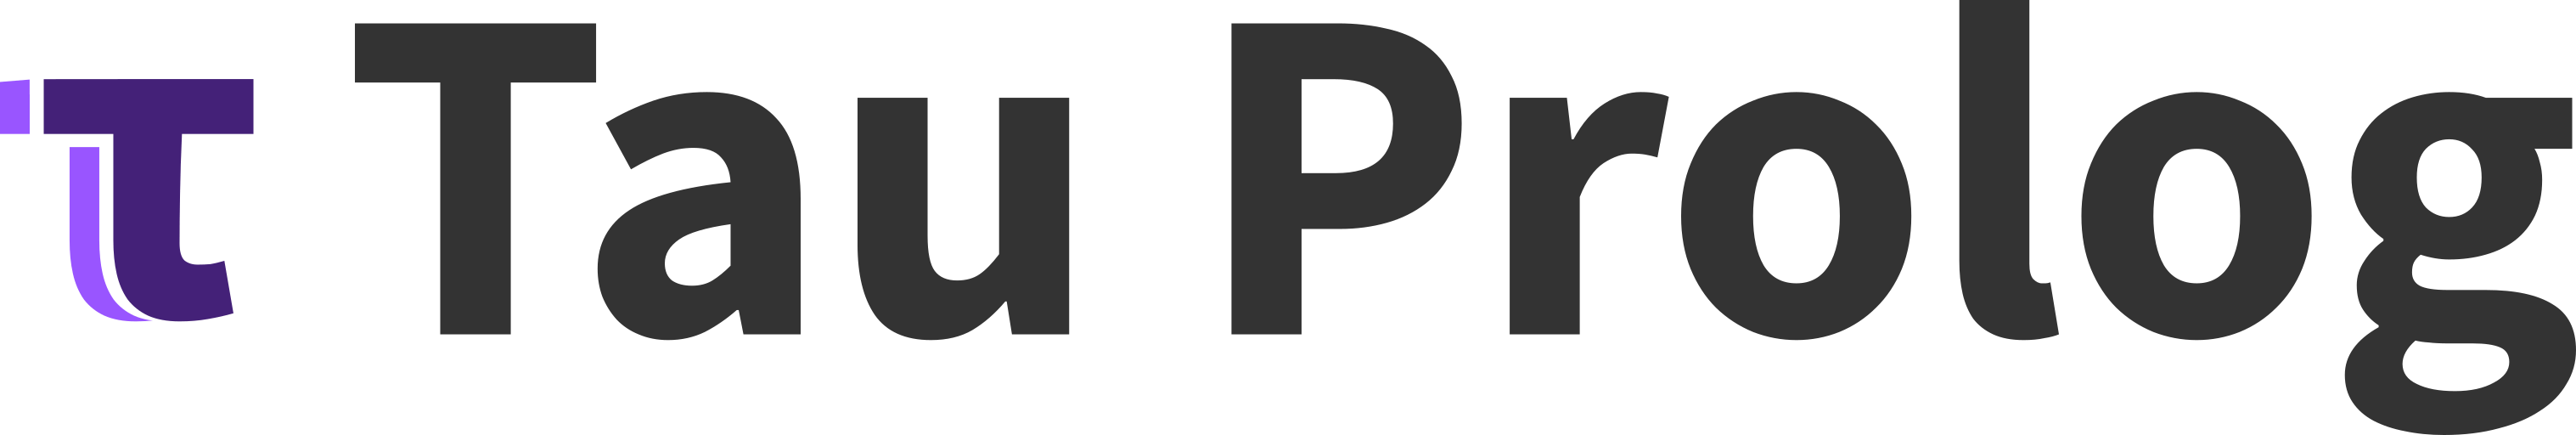 Prolog Logo - Tau Prolog: Downloads